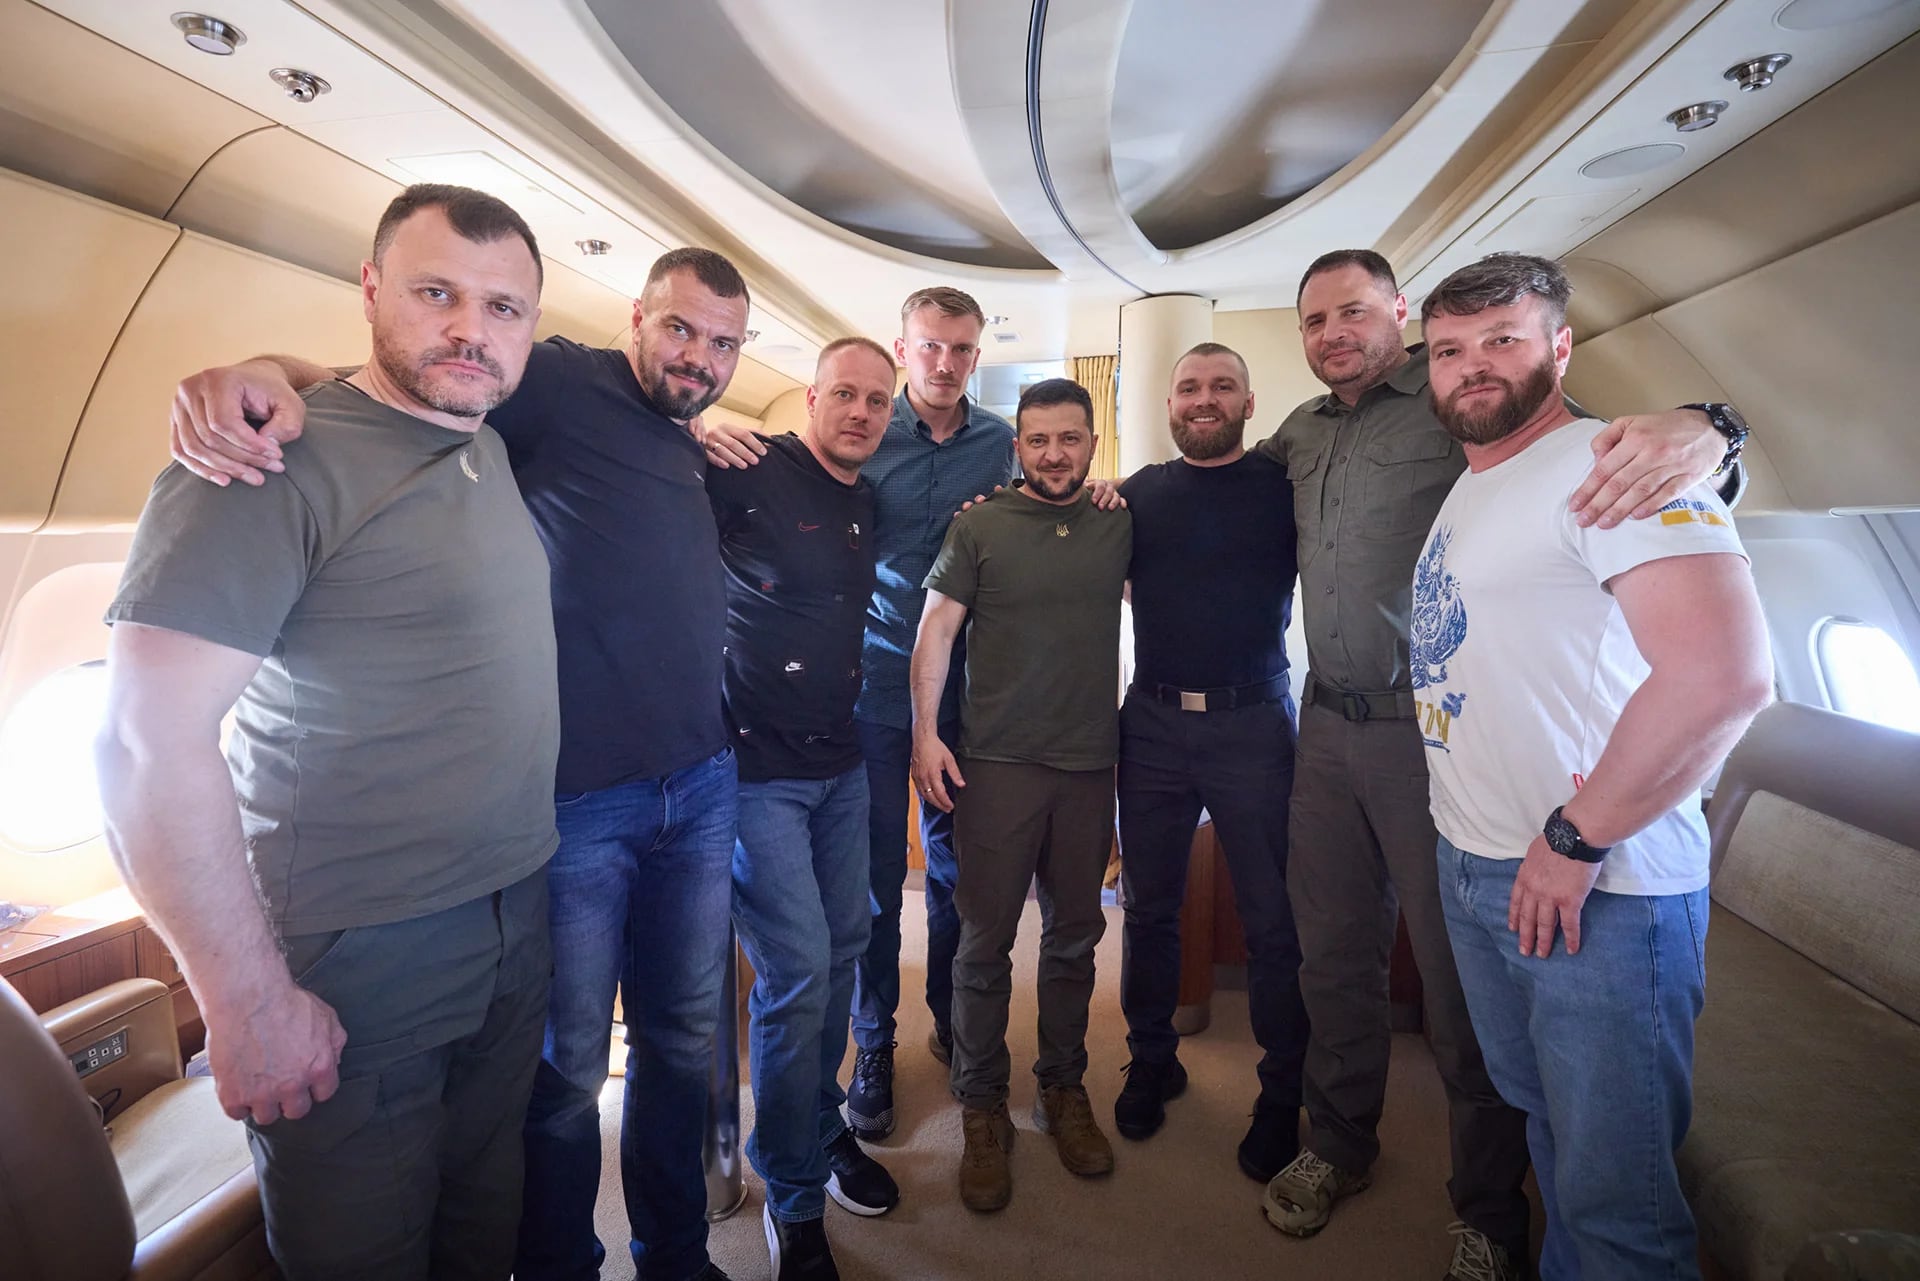 Denys Prokopenko, Svyatoslav Palamar, Serhiy Volynsky, Oleh Khomenko, Denys Shleha son los cinco oficiales que regresaron a Kiev (Twitter: @ZelenskyyUa)